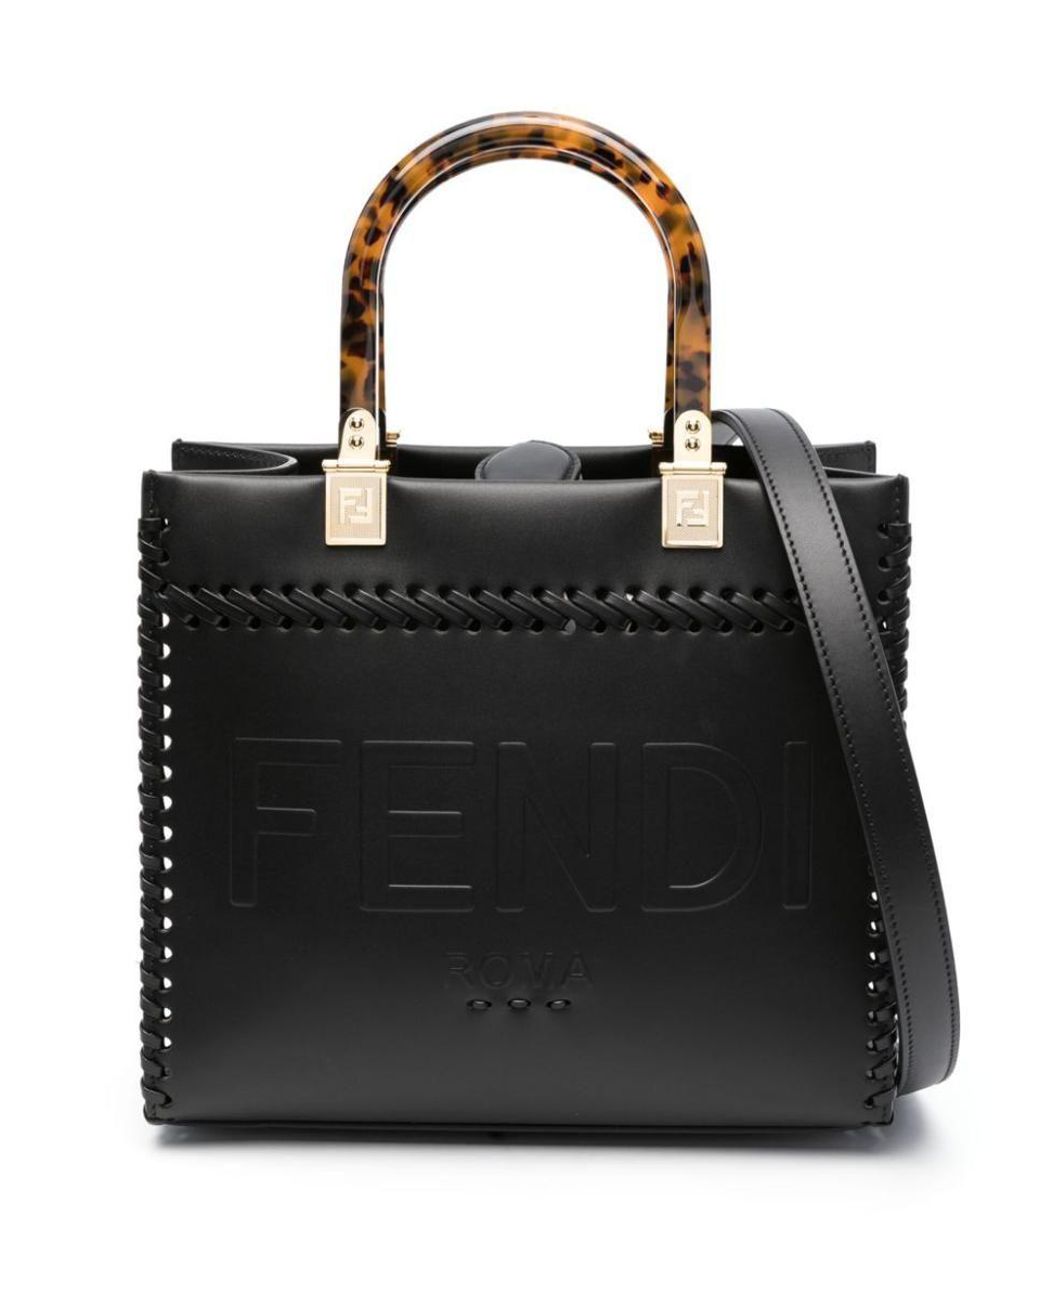 FENDI: Sunshine leather bag with embossed logo - Fuchsia | Fendi tote bags  8BH386AMCV online at GIGLIO.COM